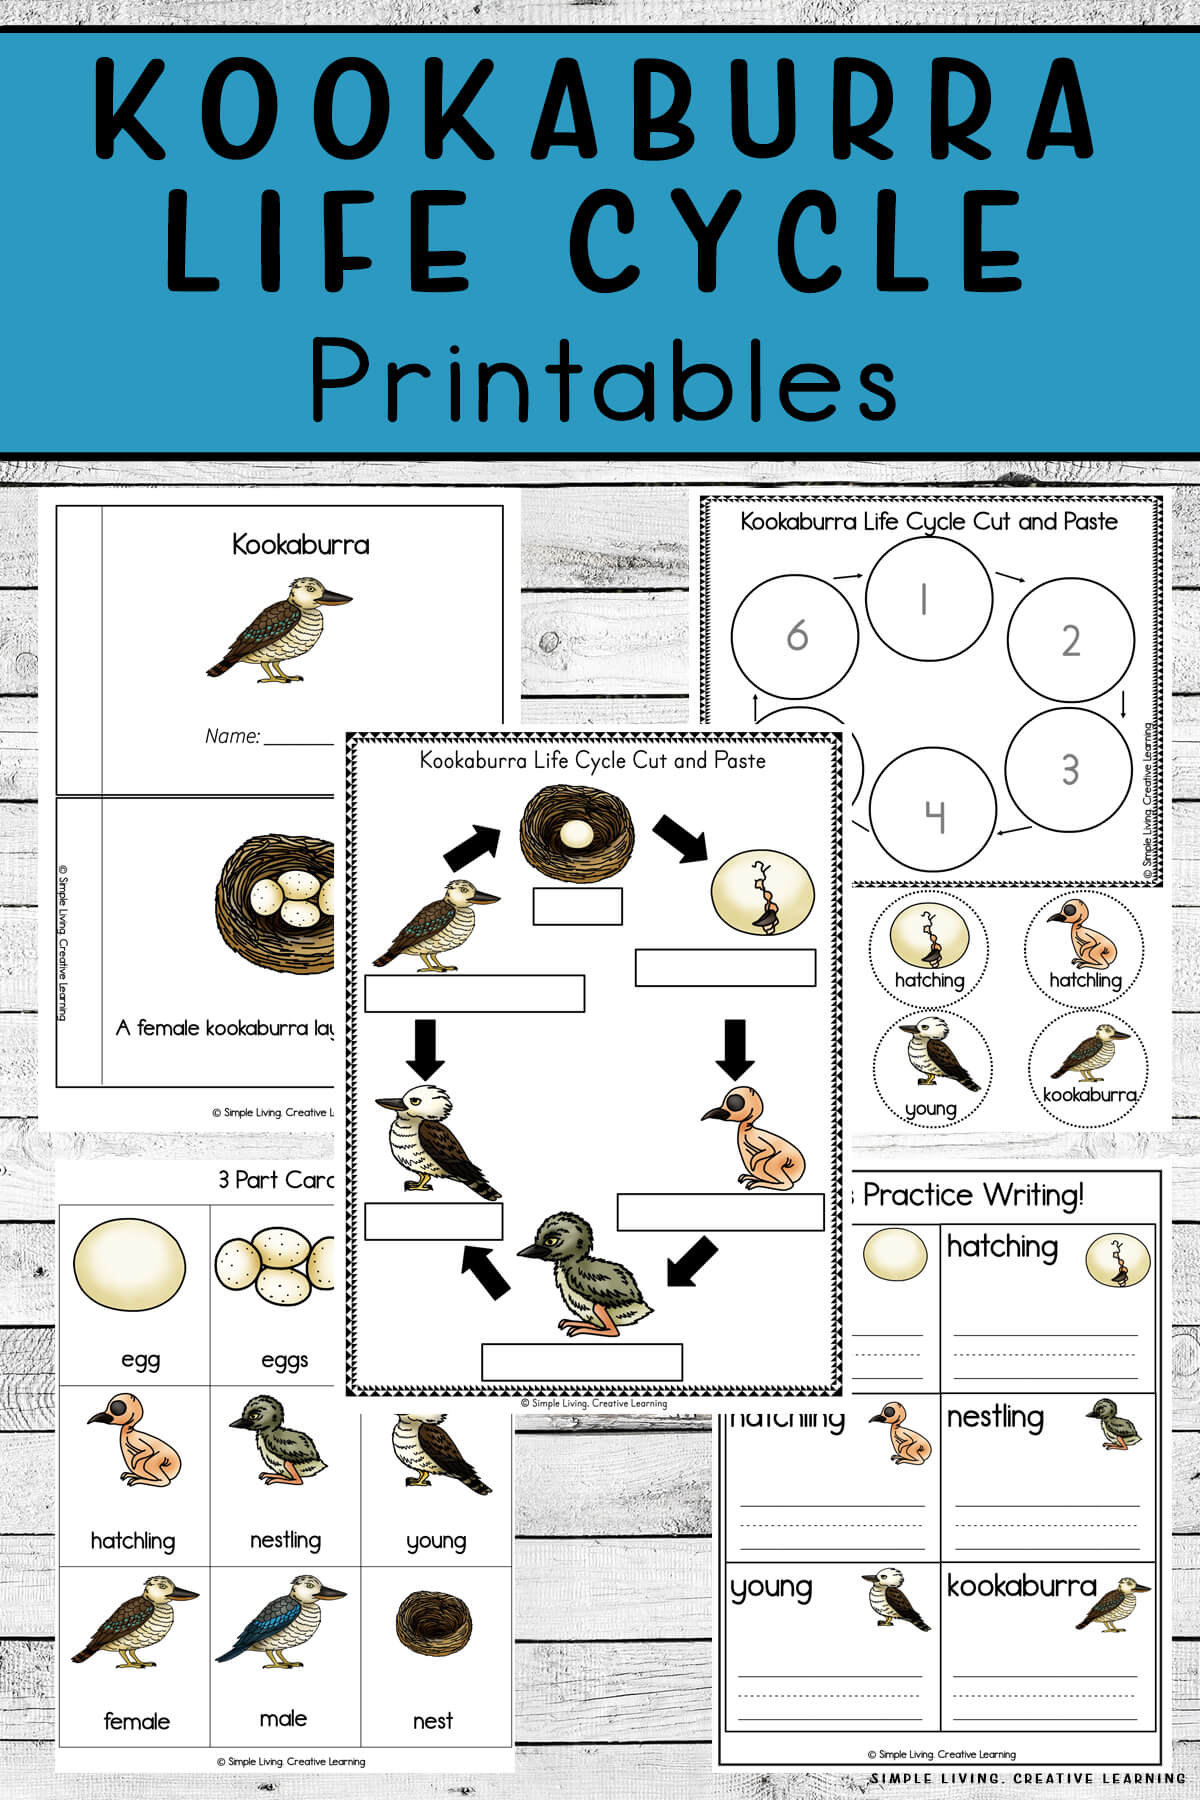 Kookaburra Life Cycle Printables